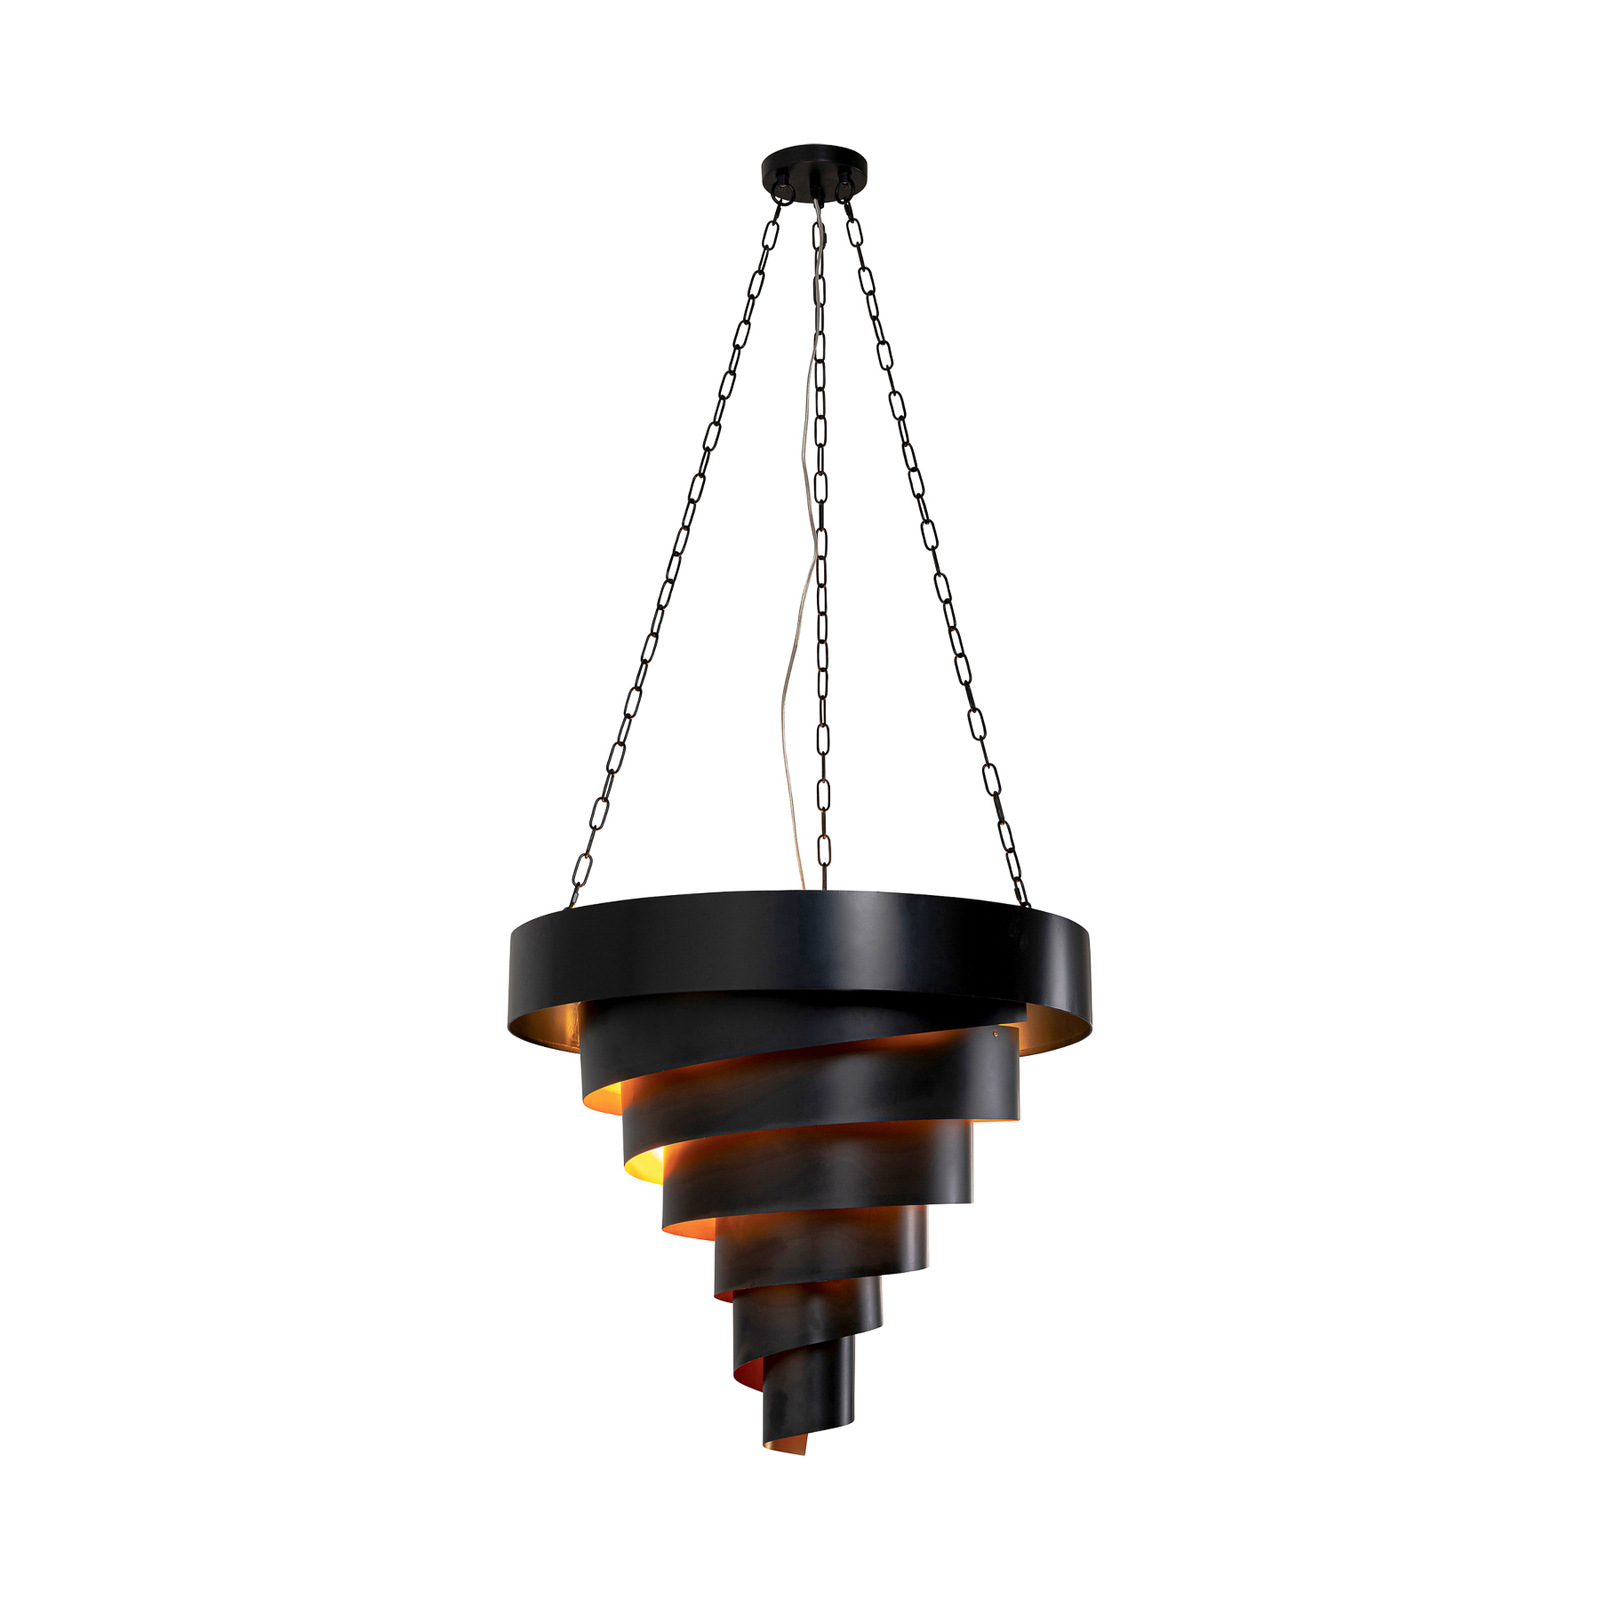 KARE Spiral Catch hanglamp in zwart